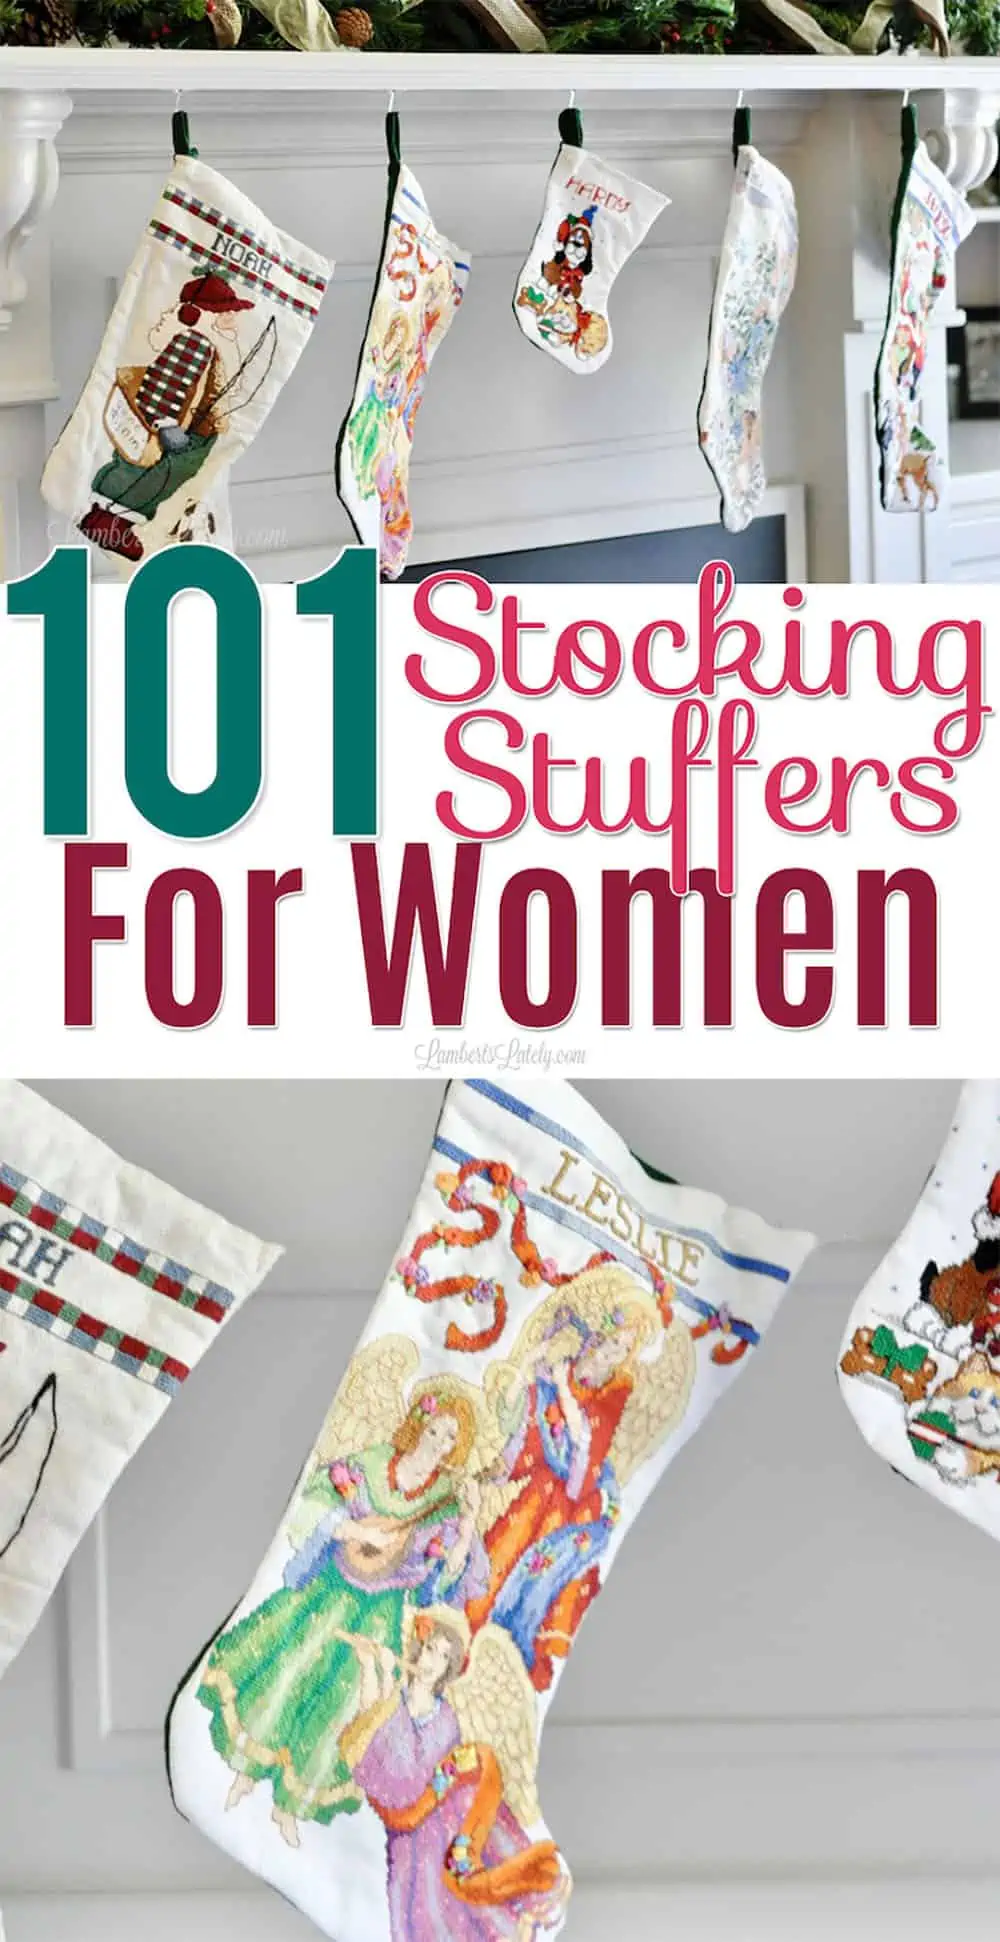 101 Stocking Stuffers for Women.